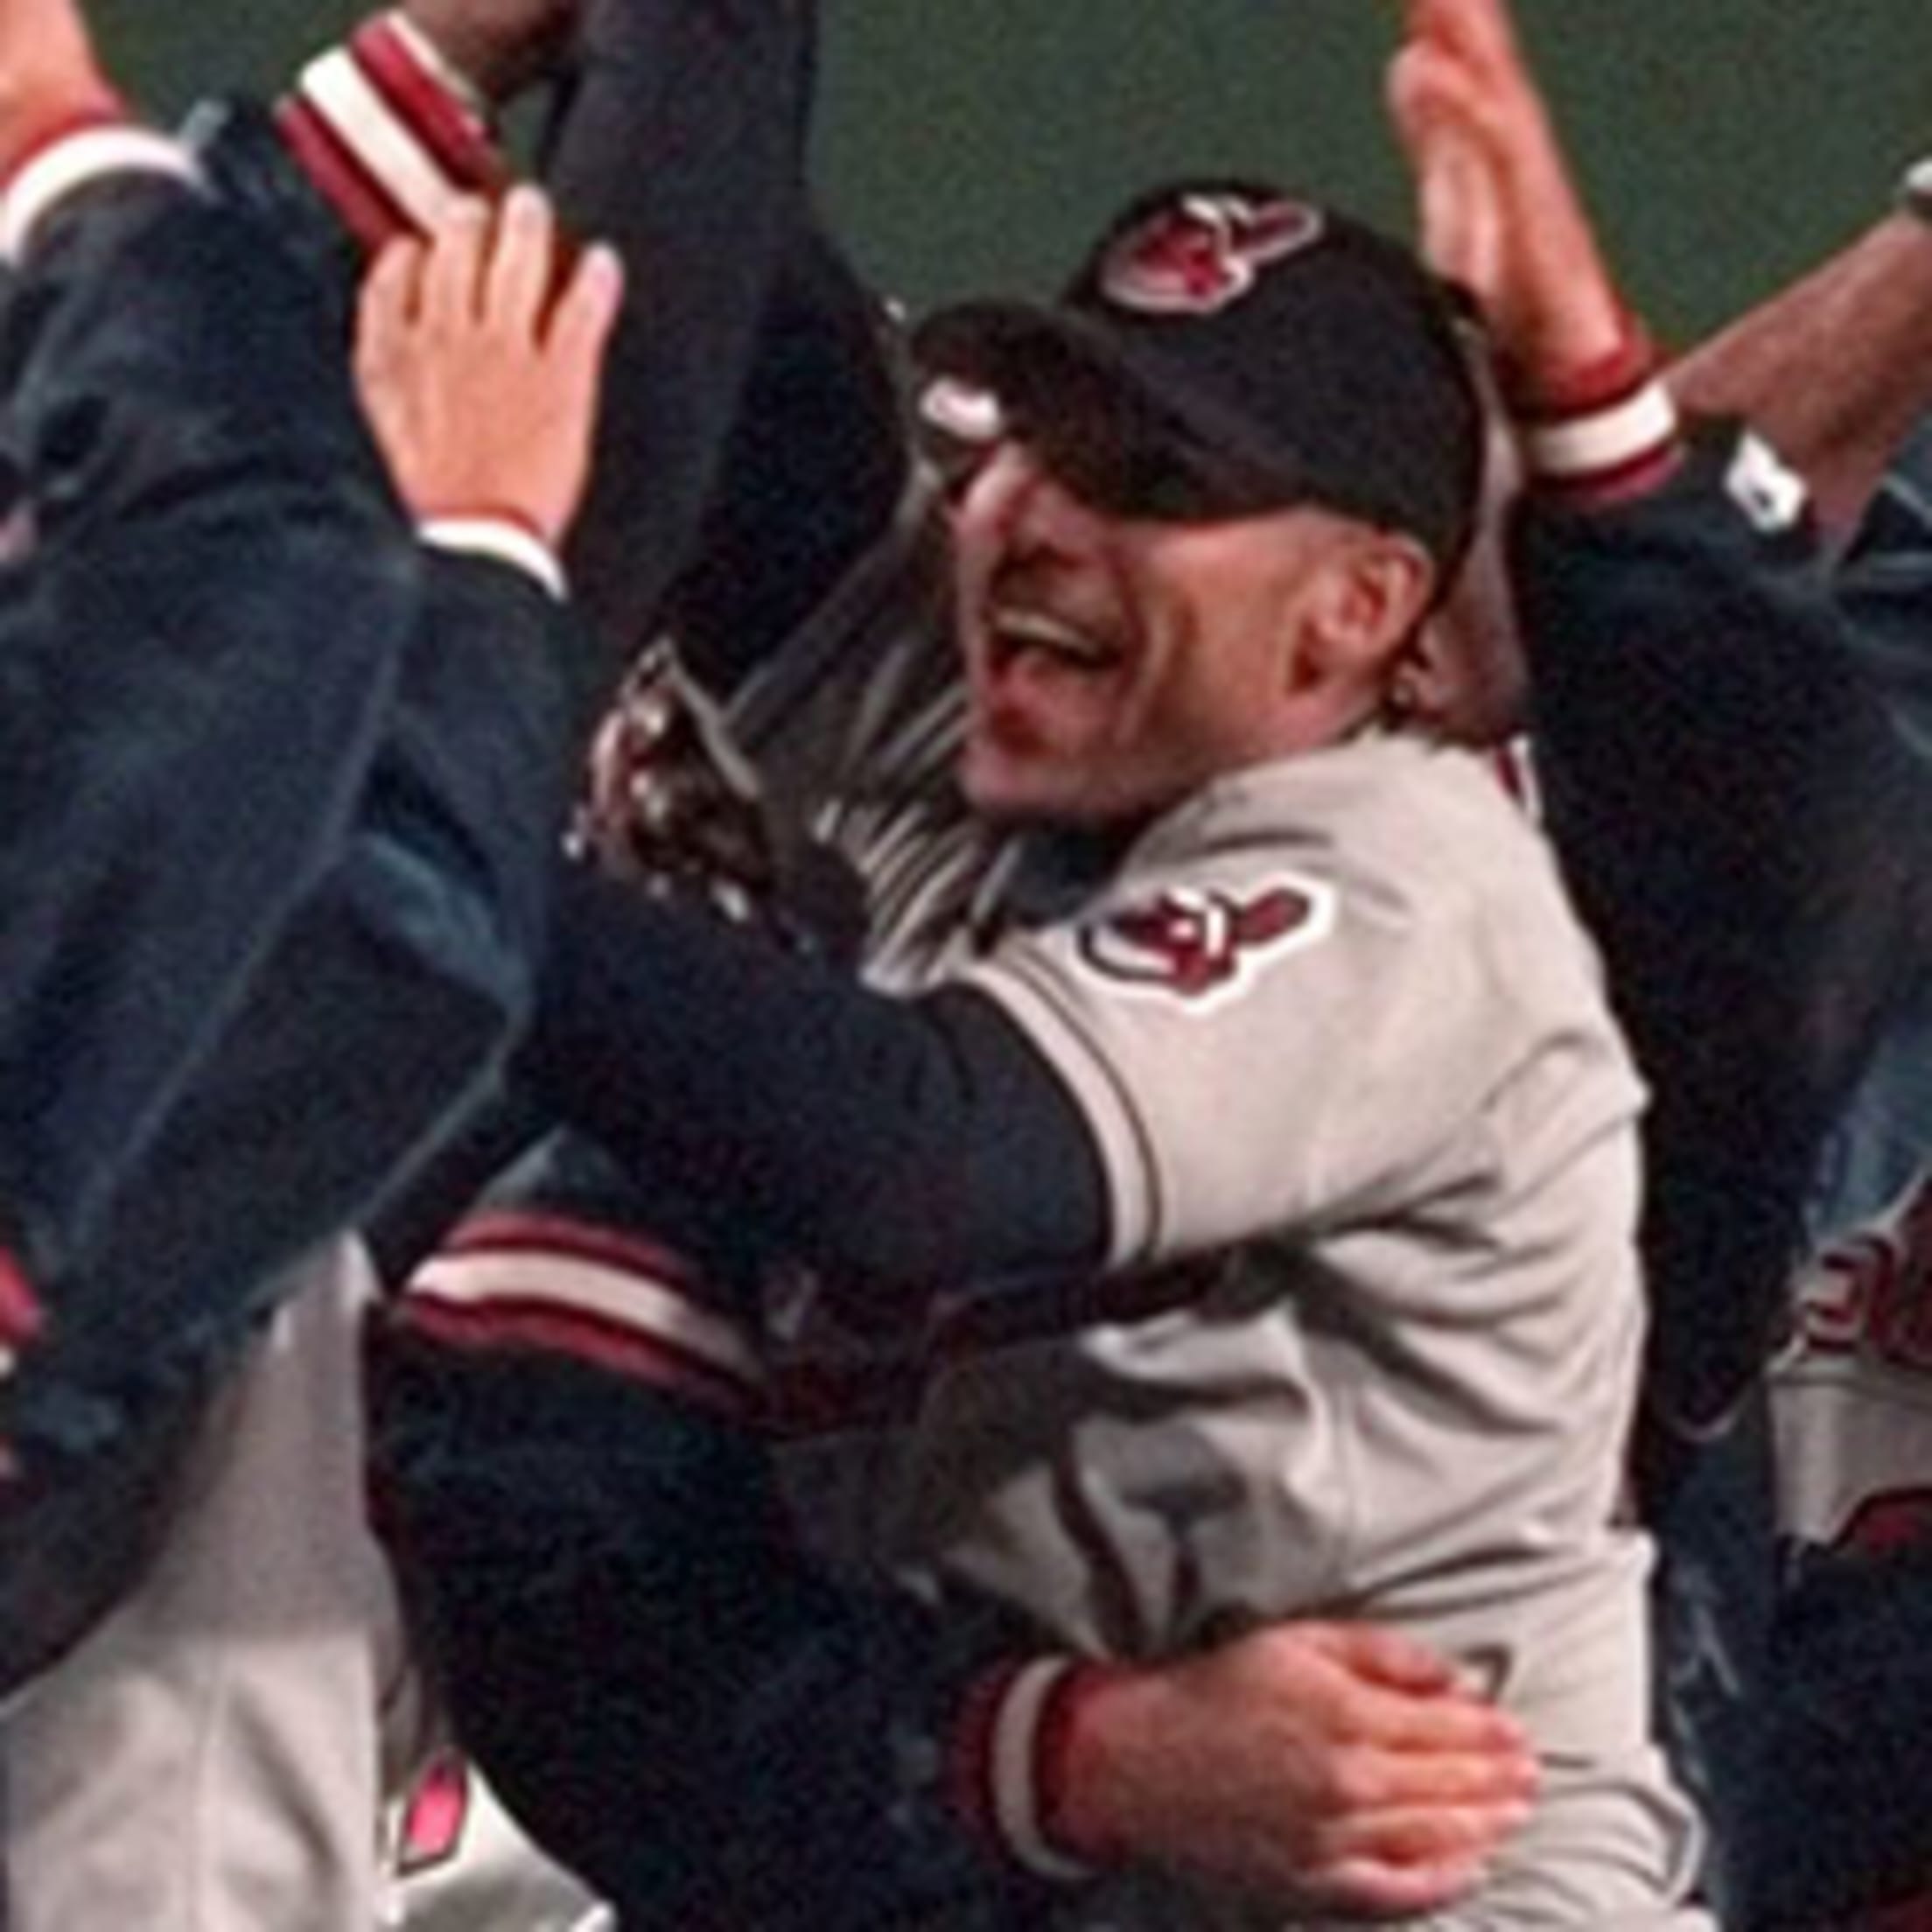 1995 World Series recap